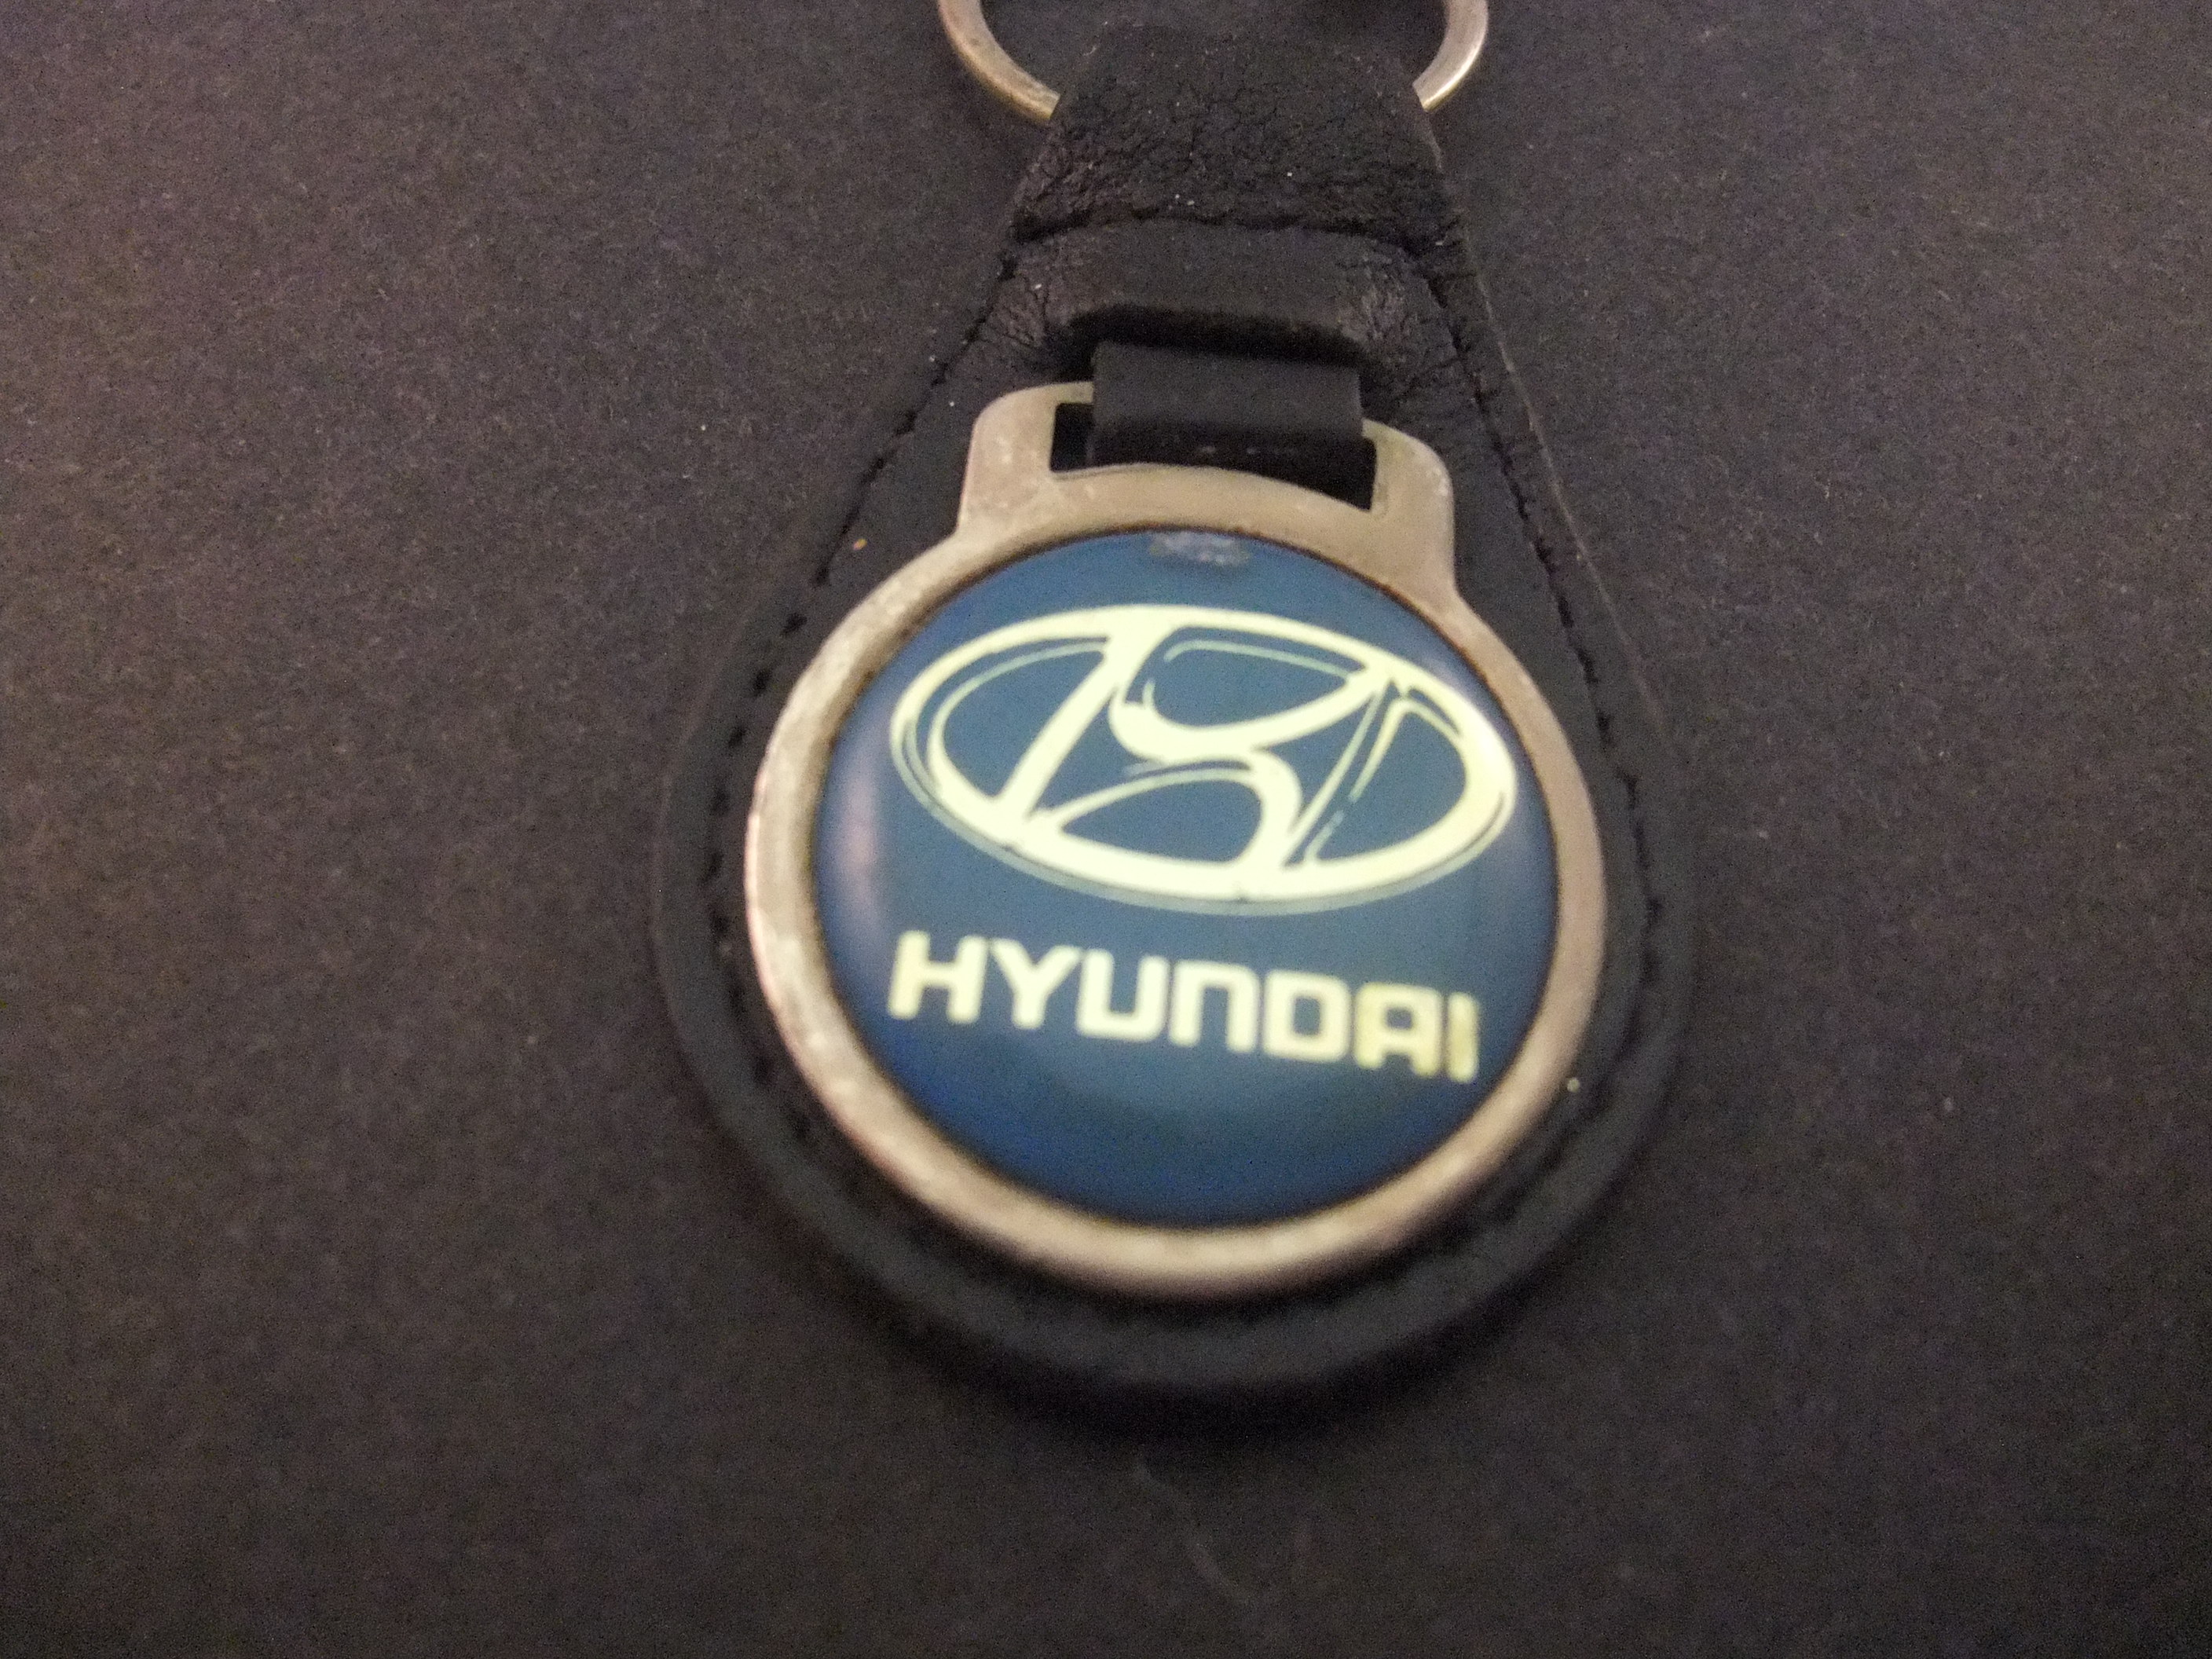 Hyundai logo autosleutelhanger